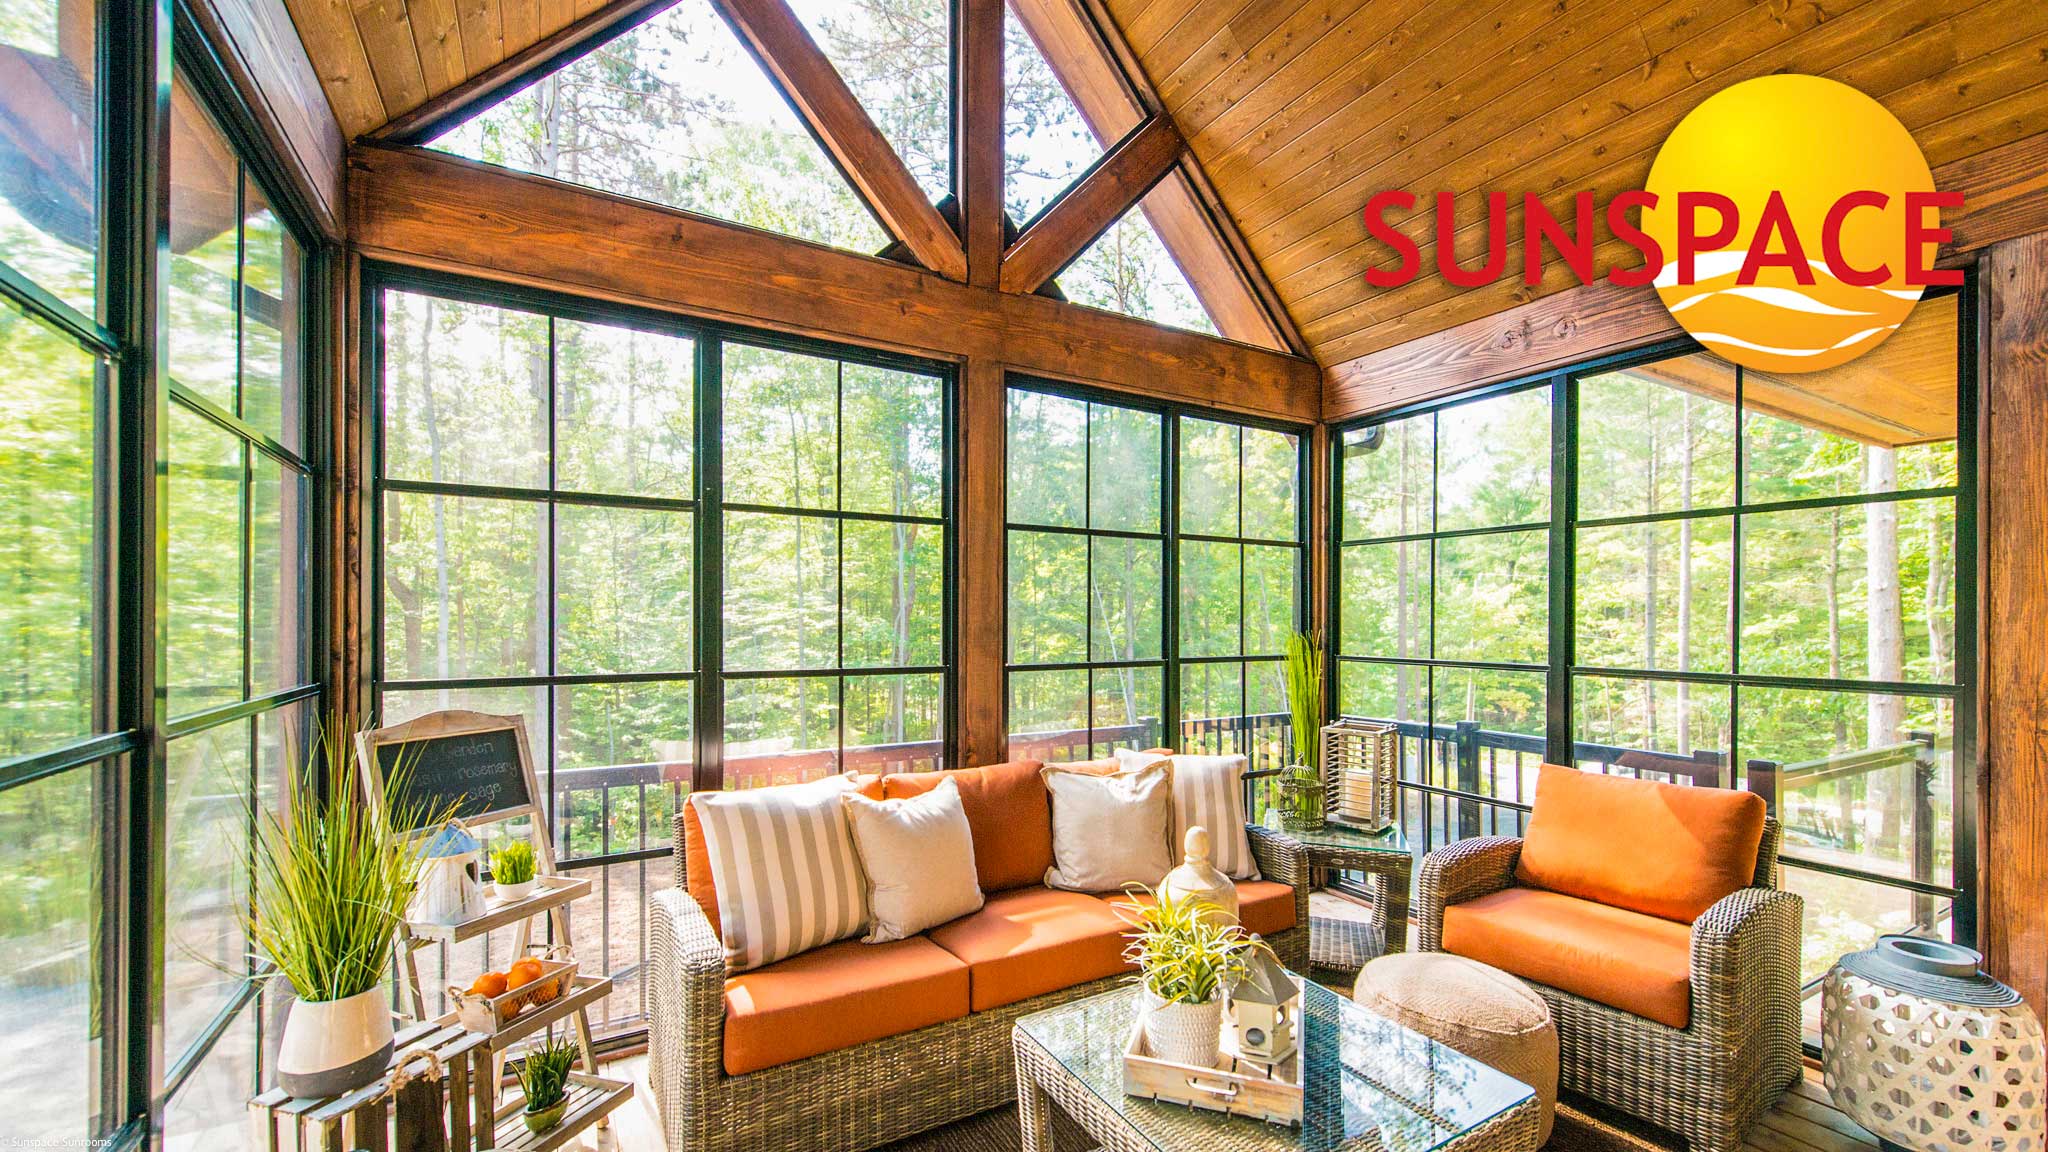 Sunspace Sunrooms | Home